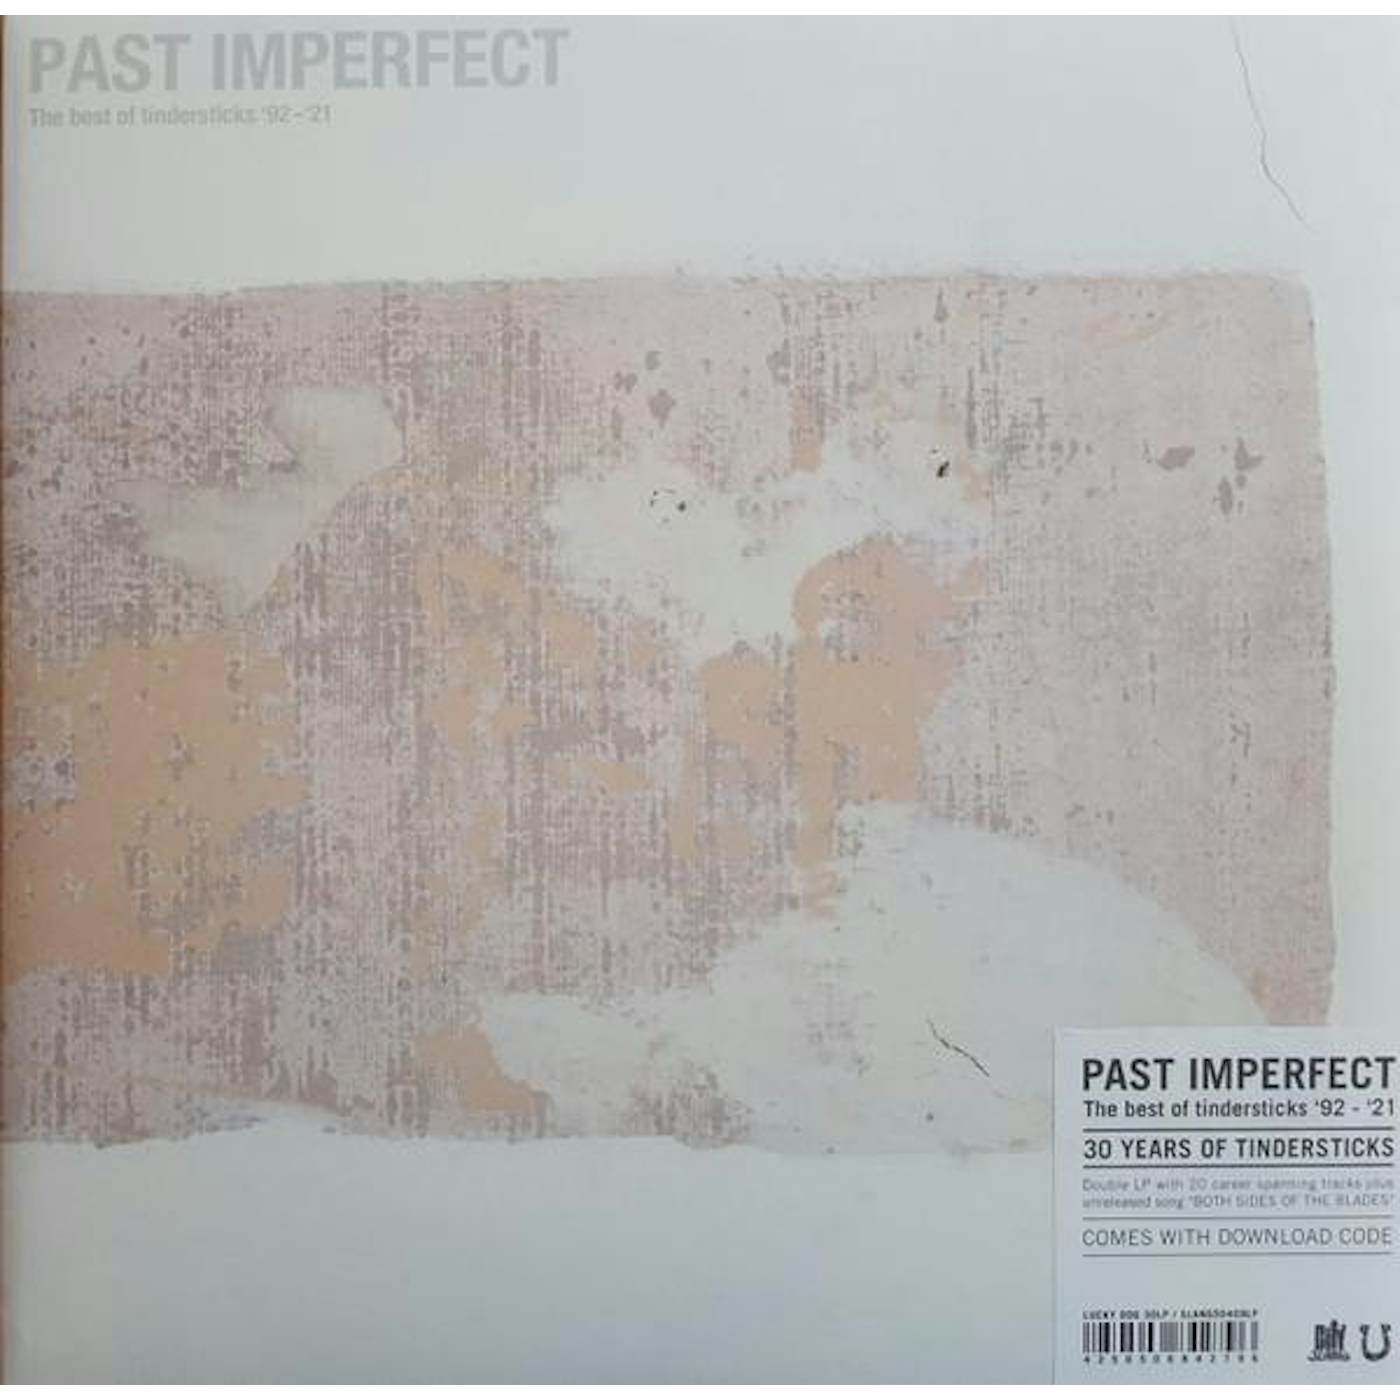 PAST IMPERFECT THE BEST OF TINDERSTICKS ’92 - ’21 (2LP/140G/DL CARD) Vinyl Record